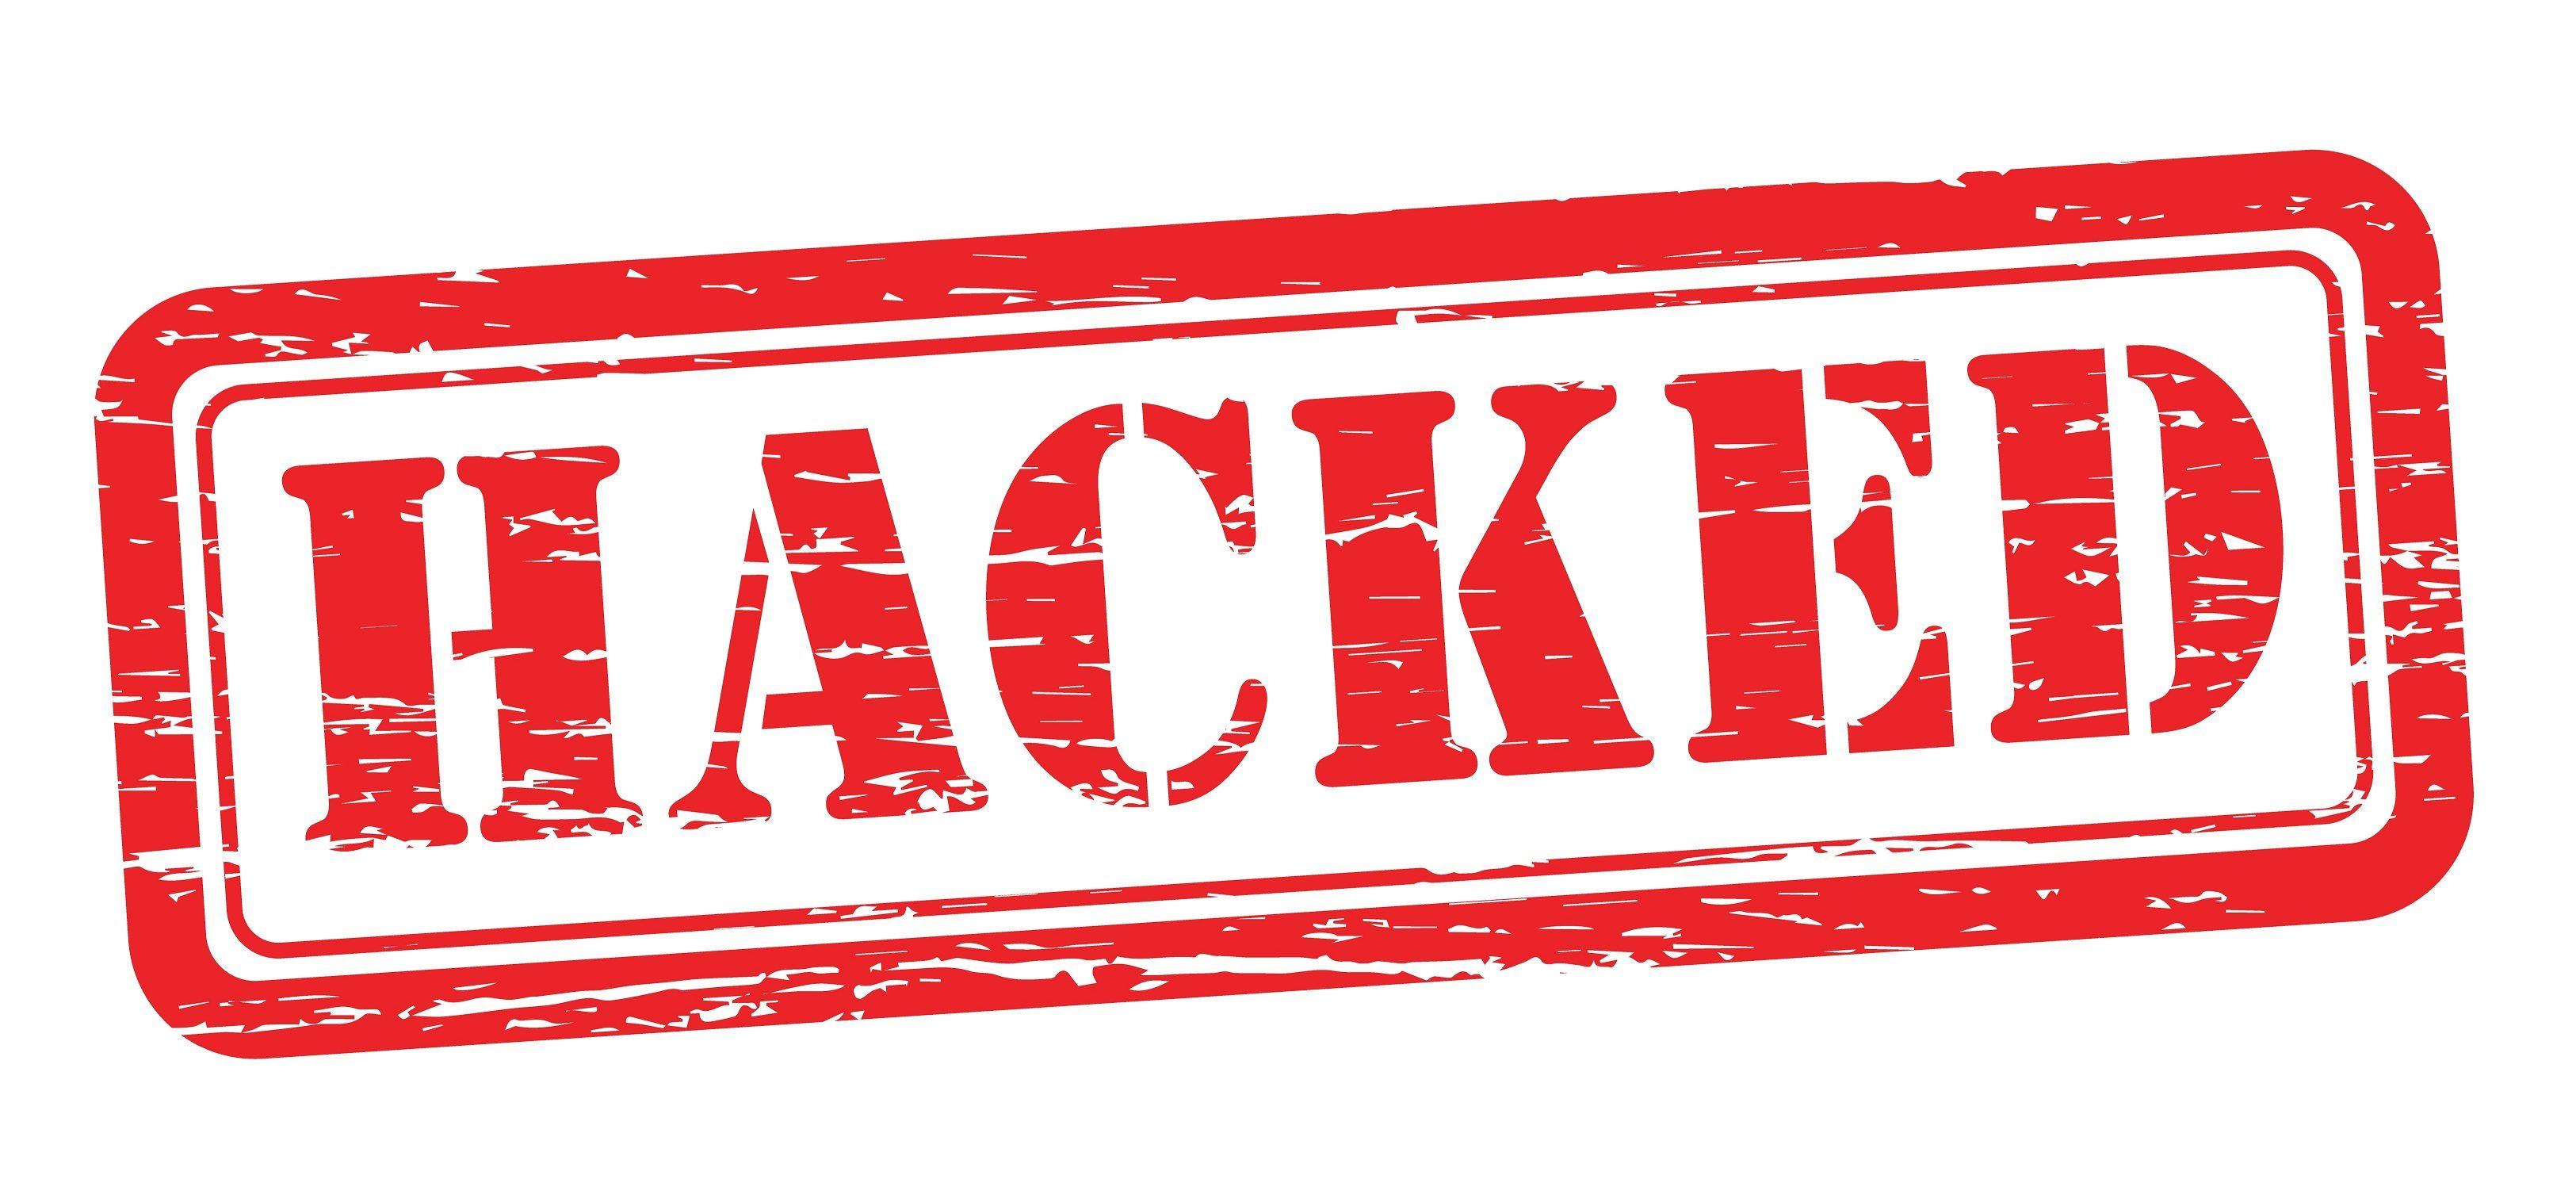 Hack Logo - Hacking for profit - Ebuyer Blog